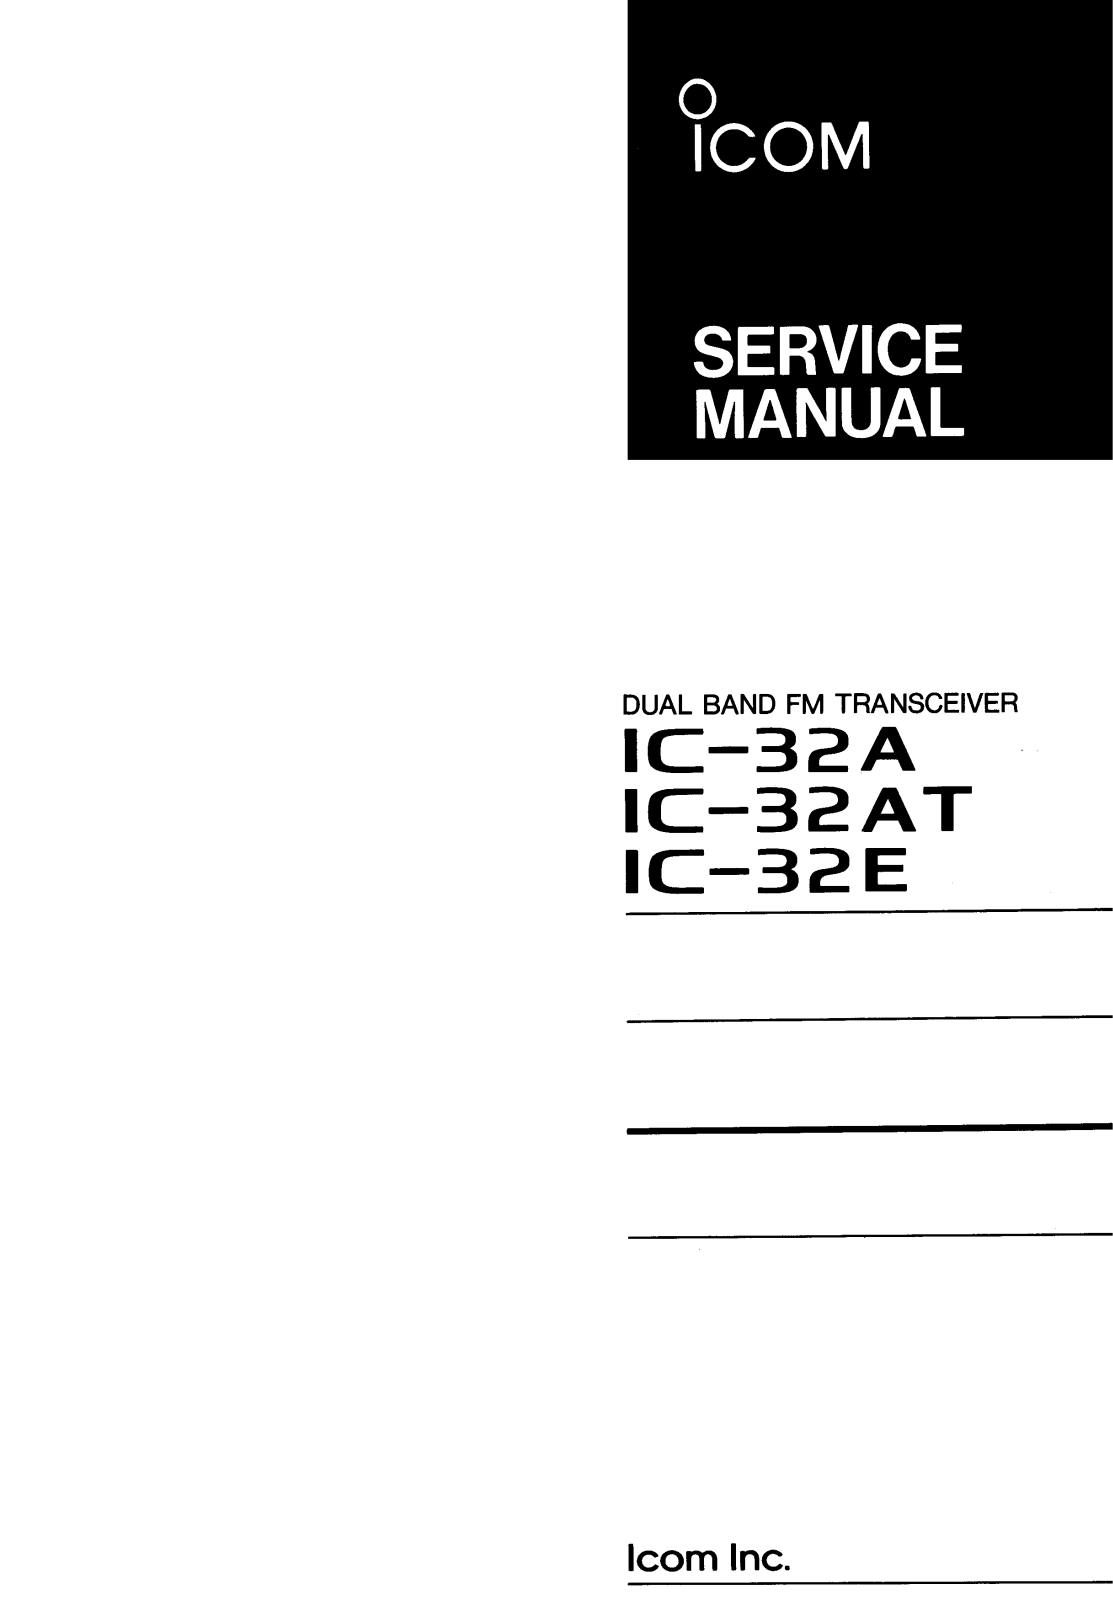 Icom IC-32AT, IC-32E, IC-32A Service Manual